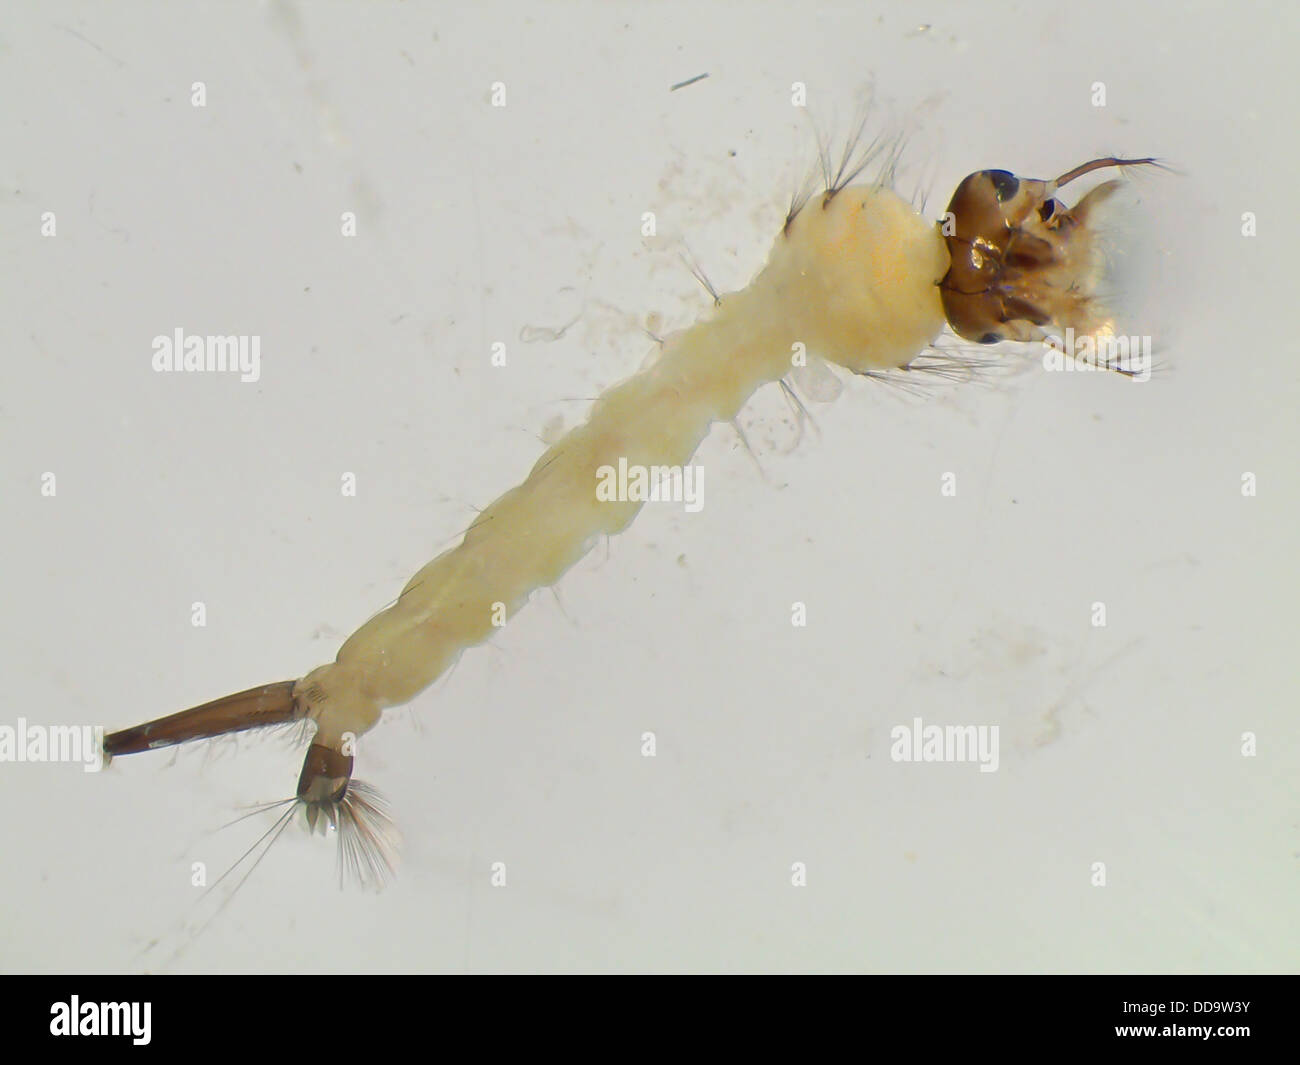 Mückenlarven unter dem Mikroskop Stockfotografie - Alamy